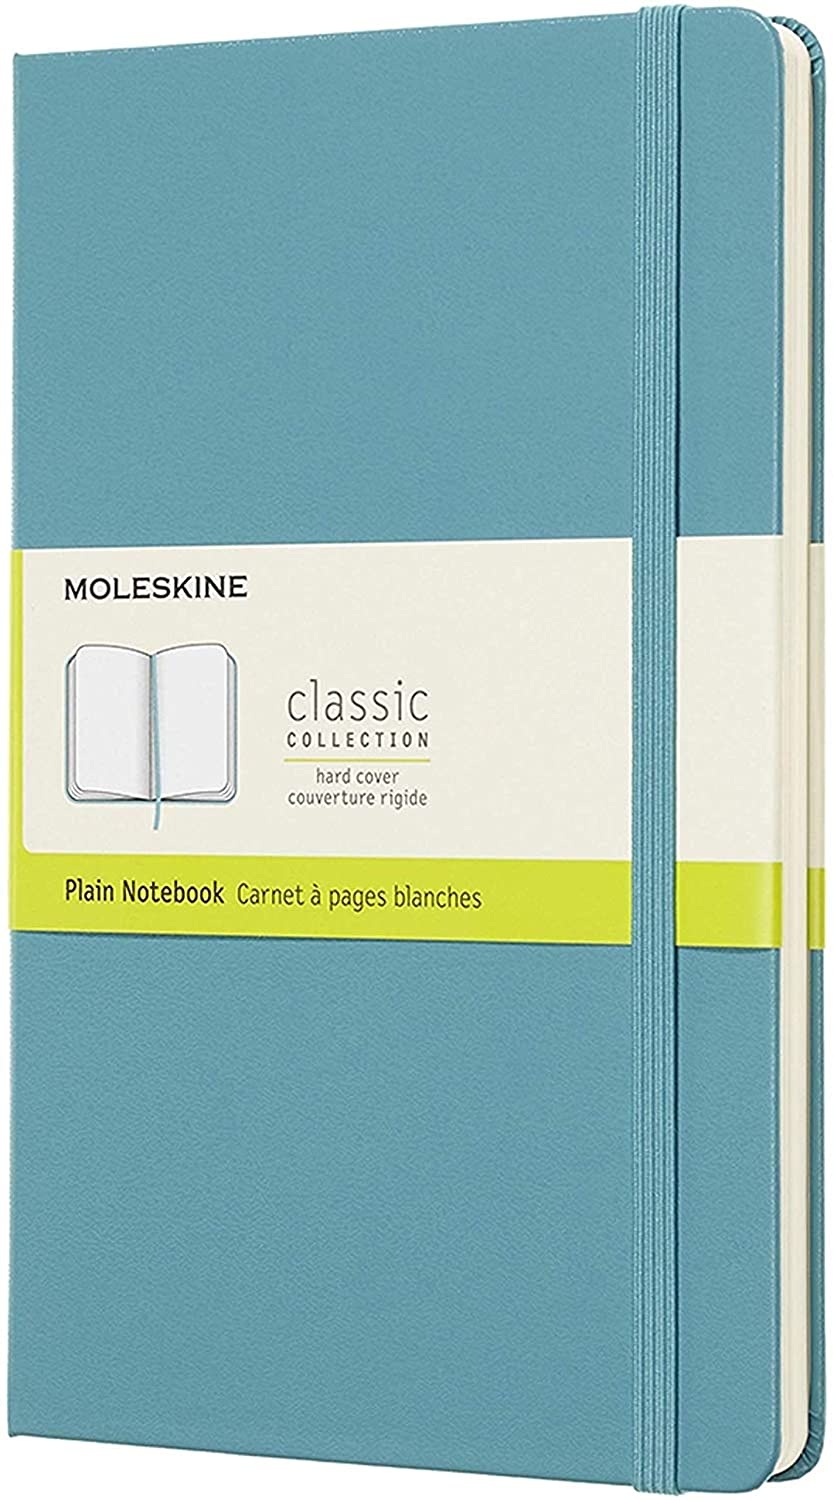 Moleskine Notebook Classic Large Reef Blue Hard Cover - Plain